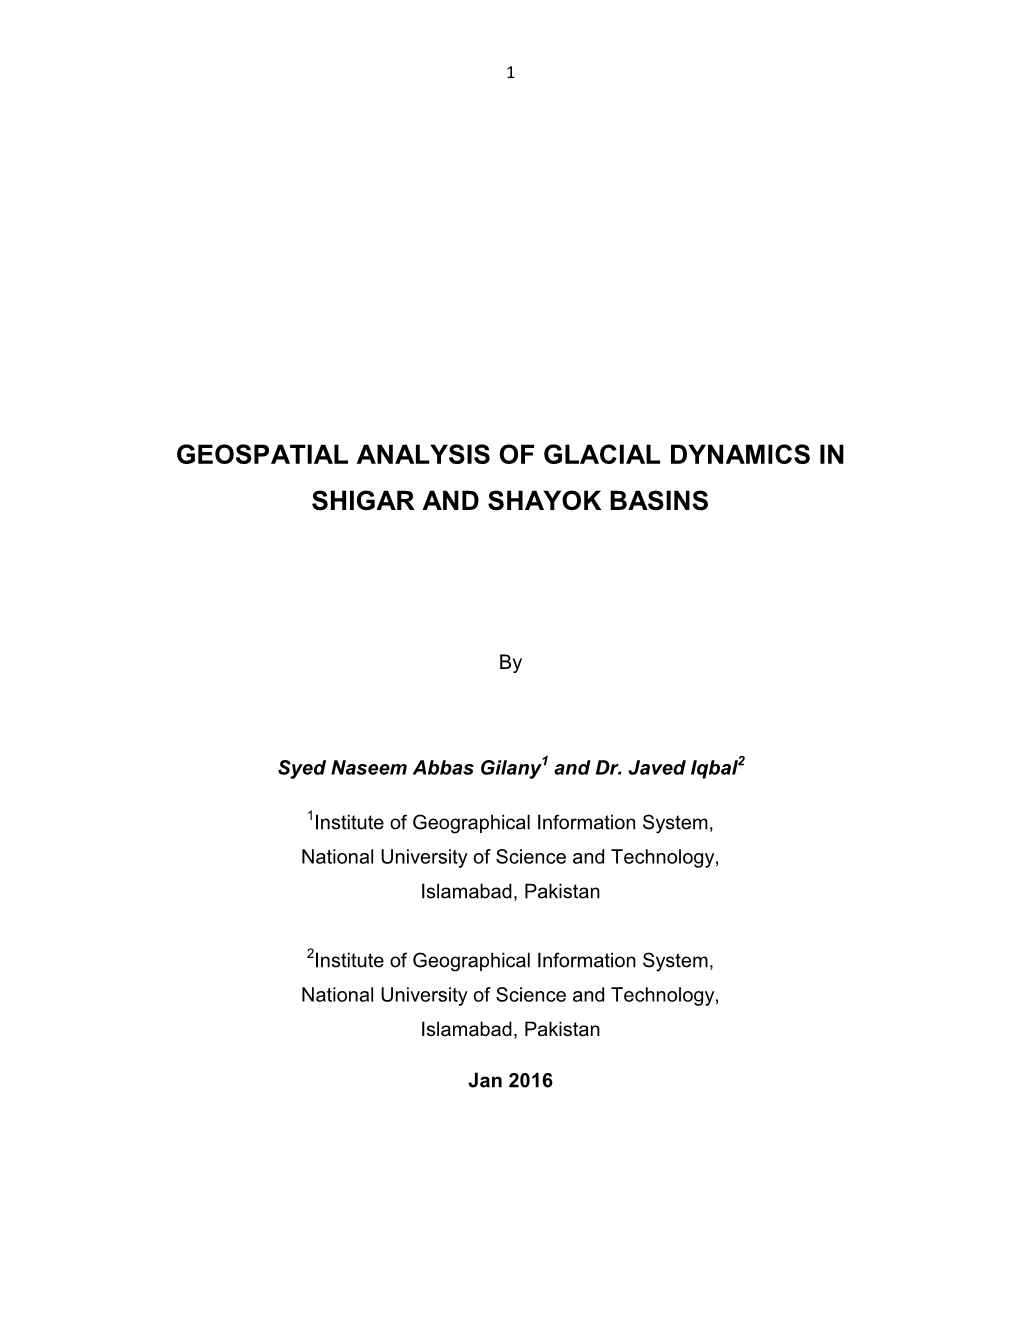 Geospatial Analysis of Glacial Dynamics in Shigar and Shayok Basins